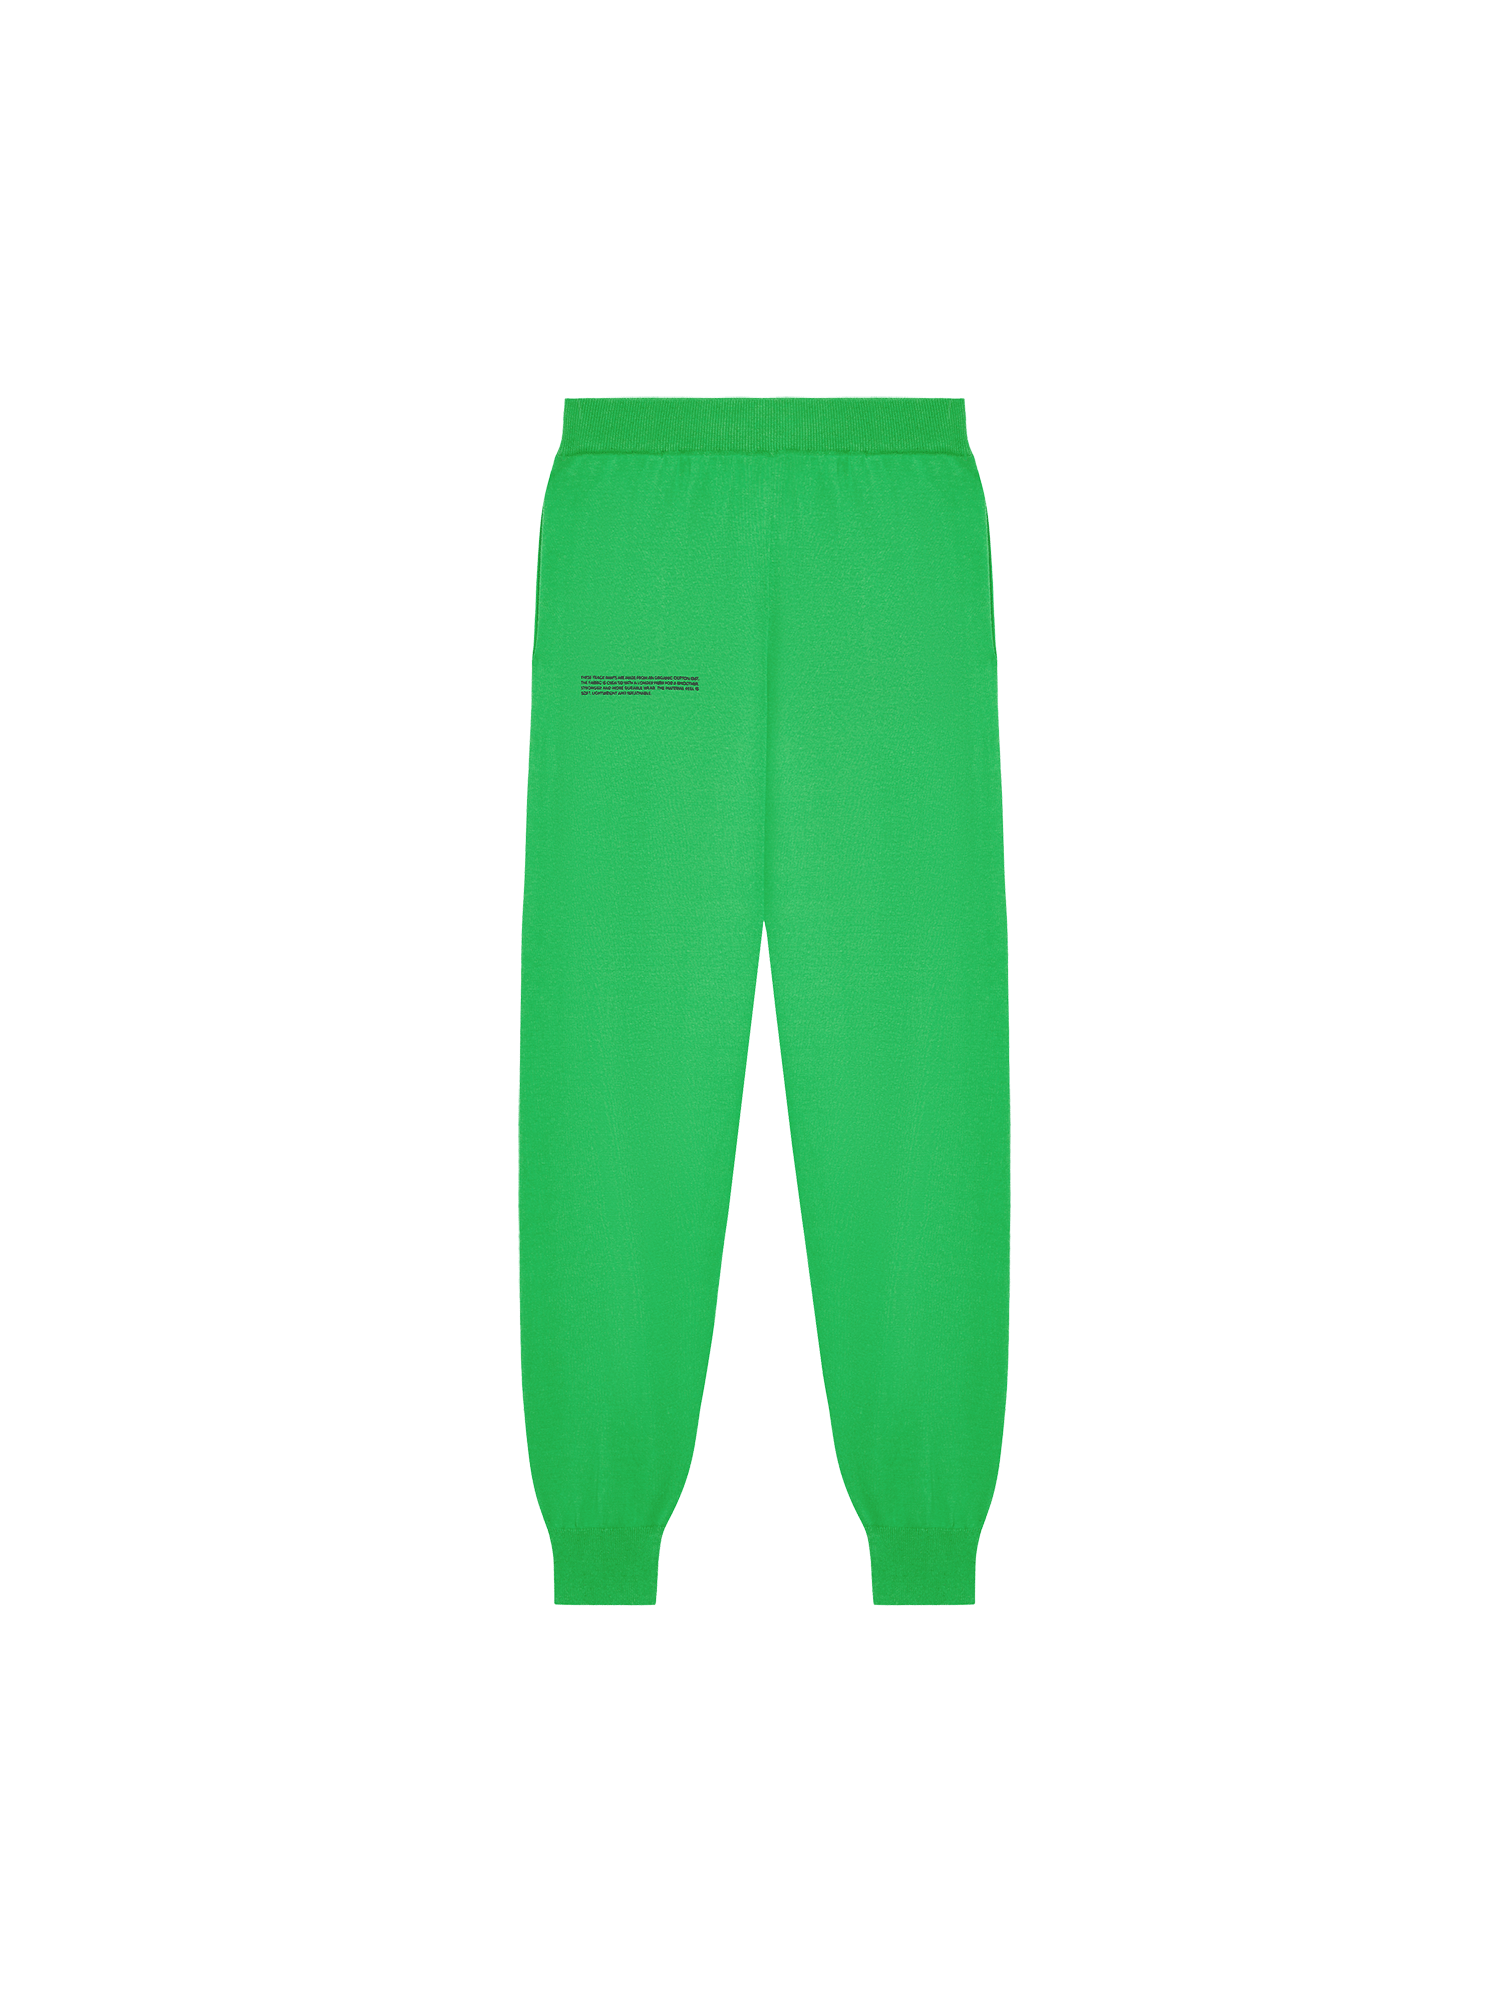 Cotton-Knit-Track-Pants-Jade-Green-packshot-4